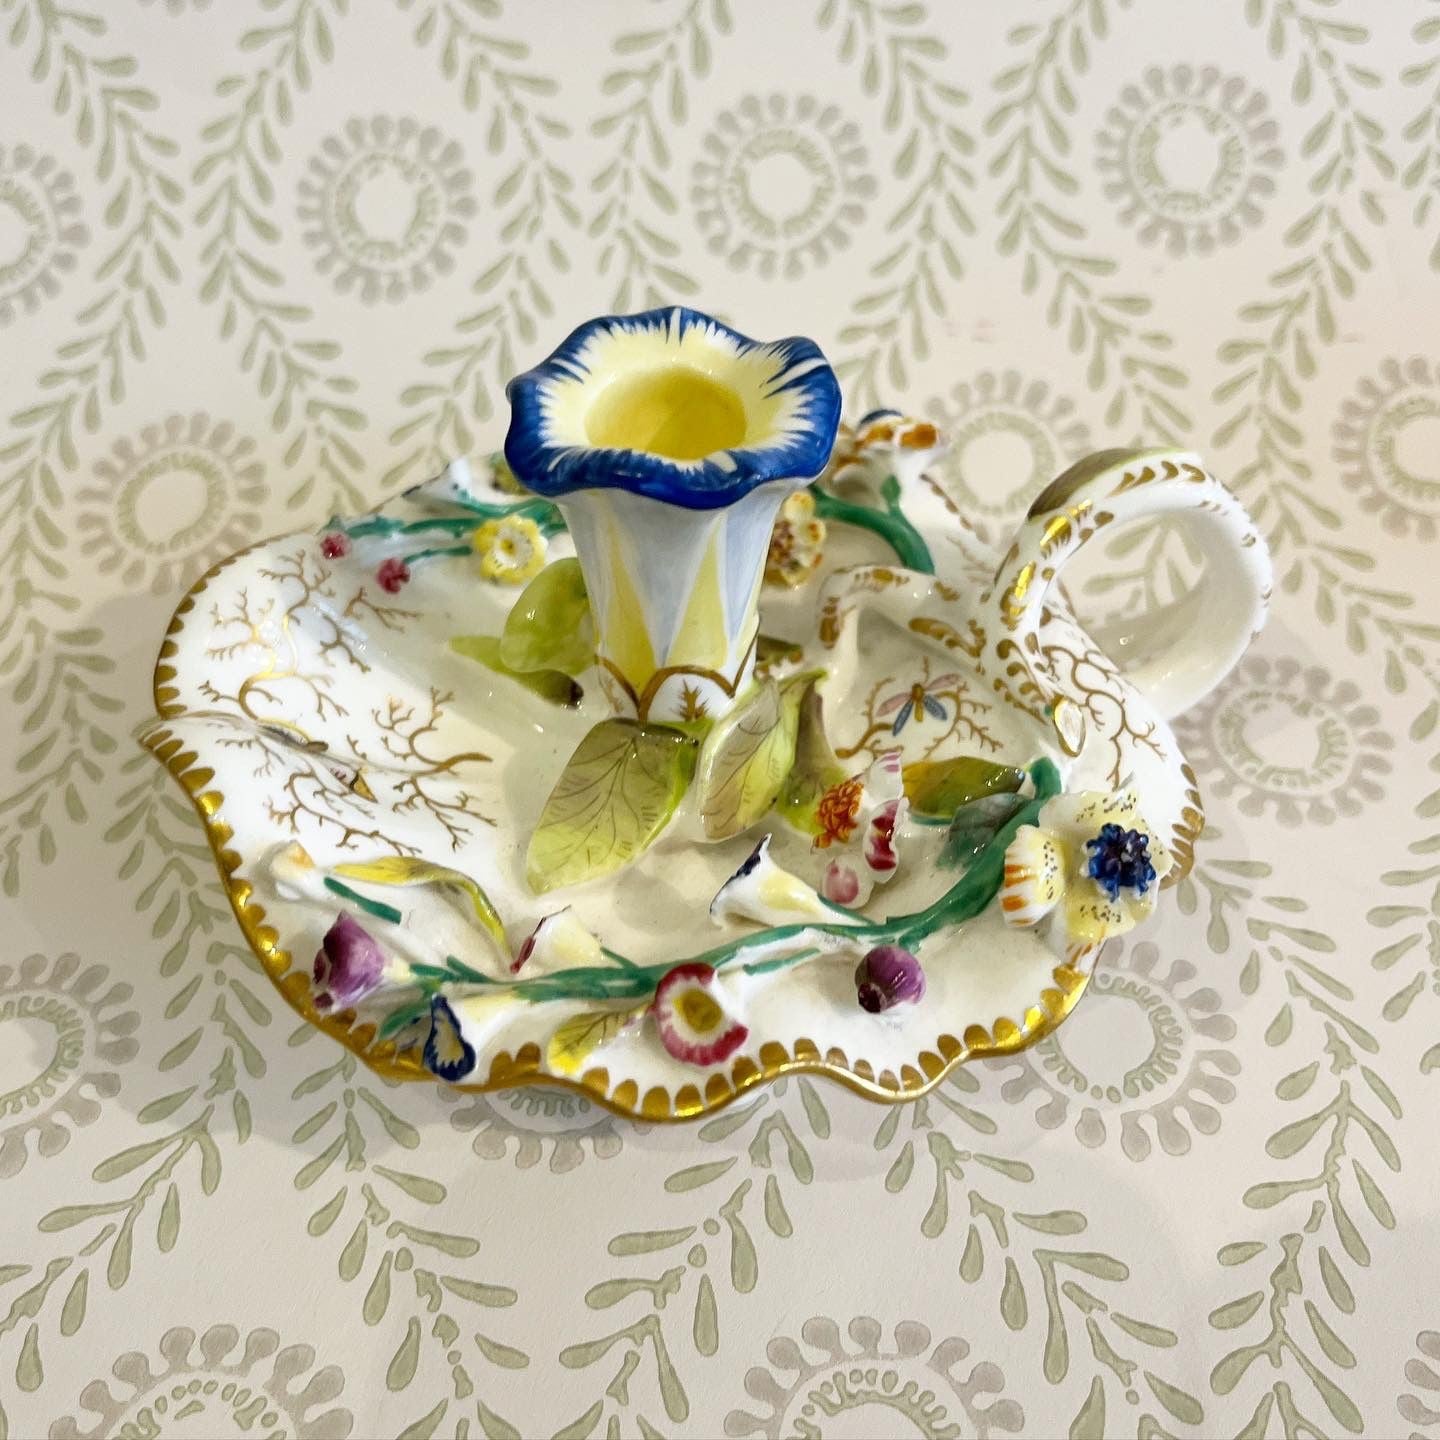 A Coalbrookdale Style Floral Encrusted Porcelain Candle Holder, circa 1830s